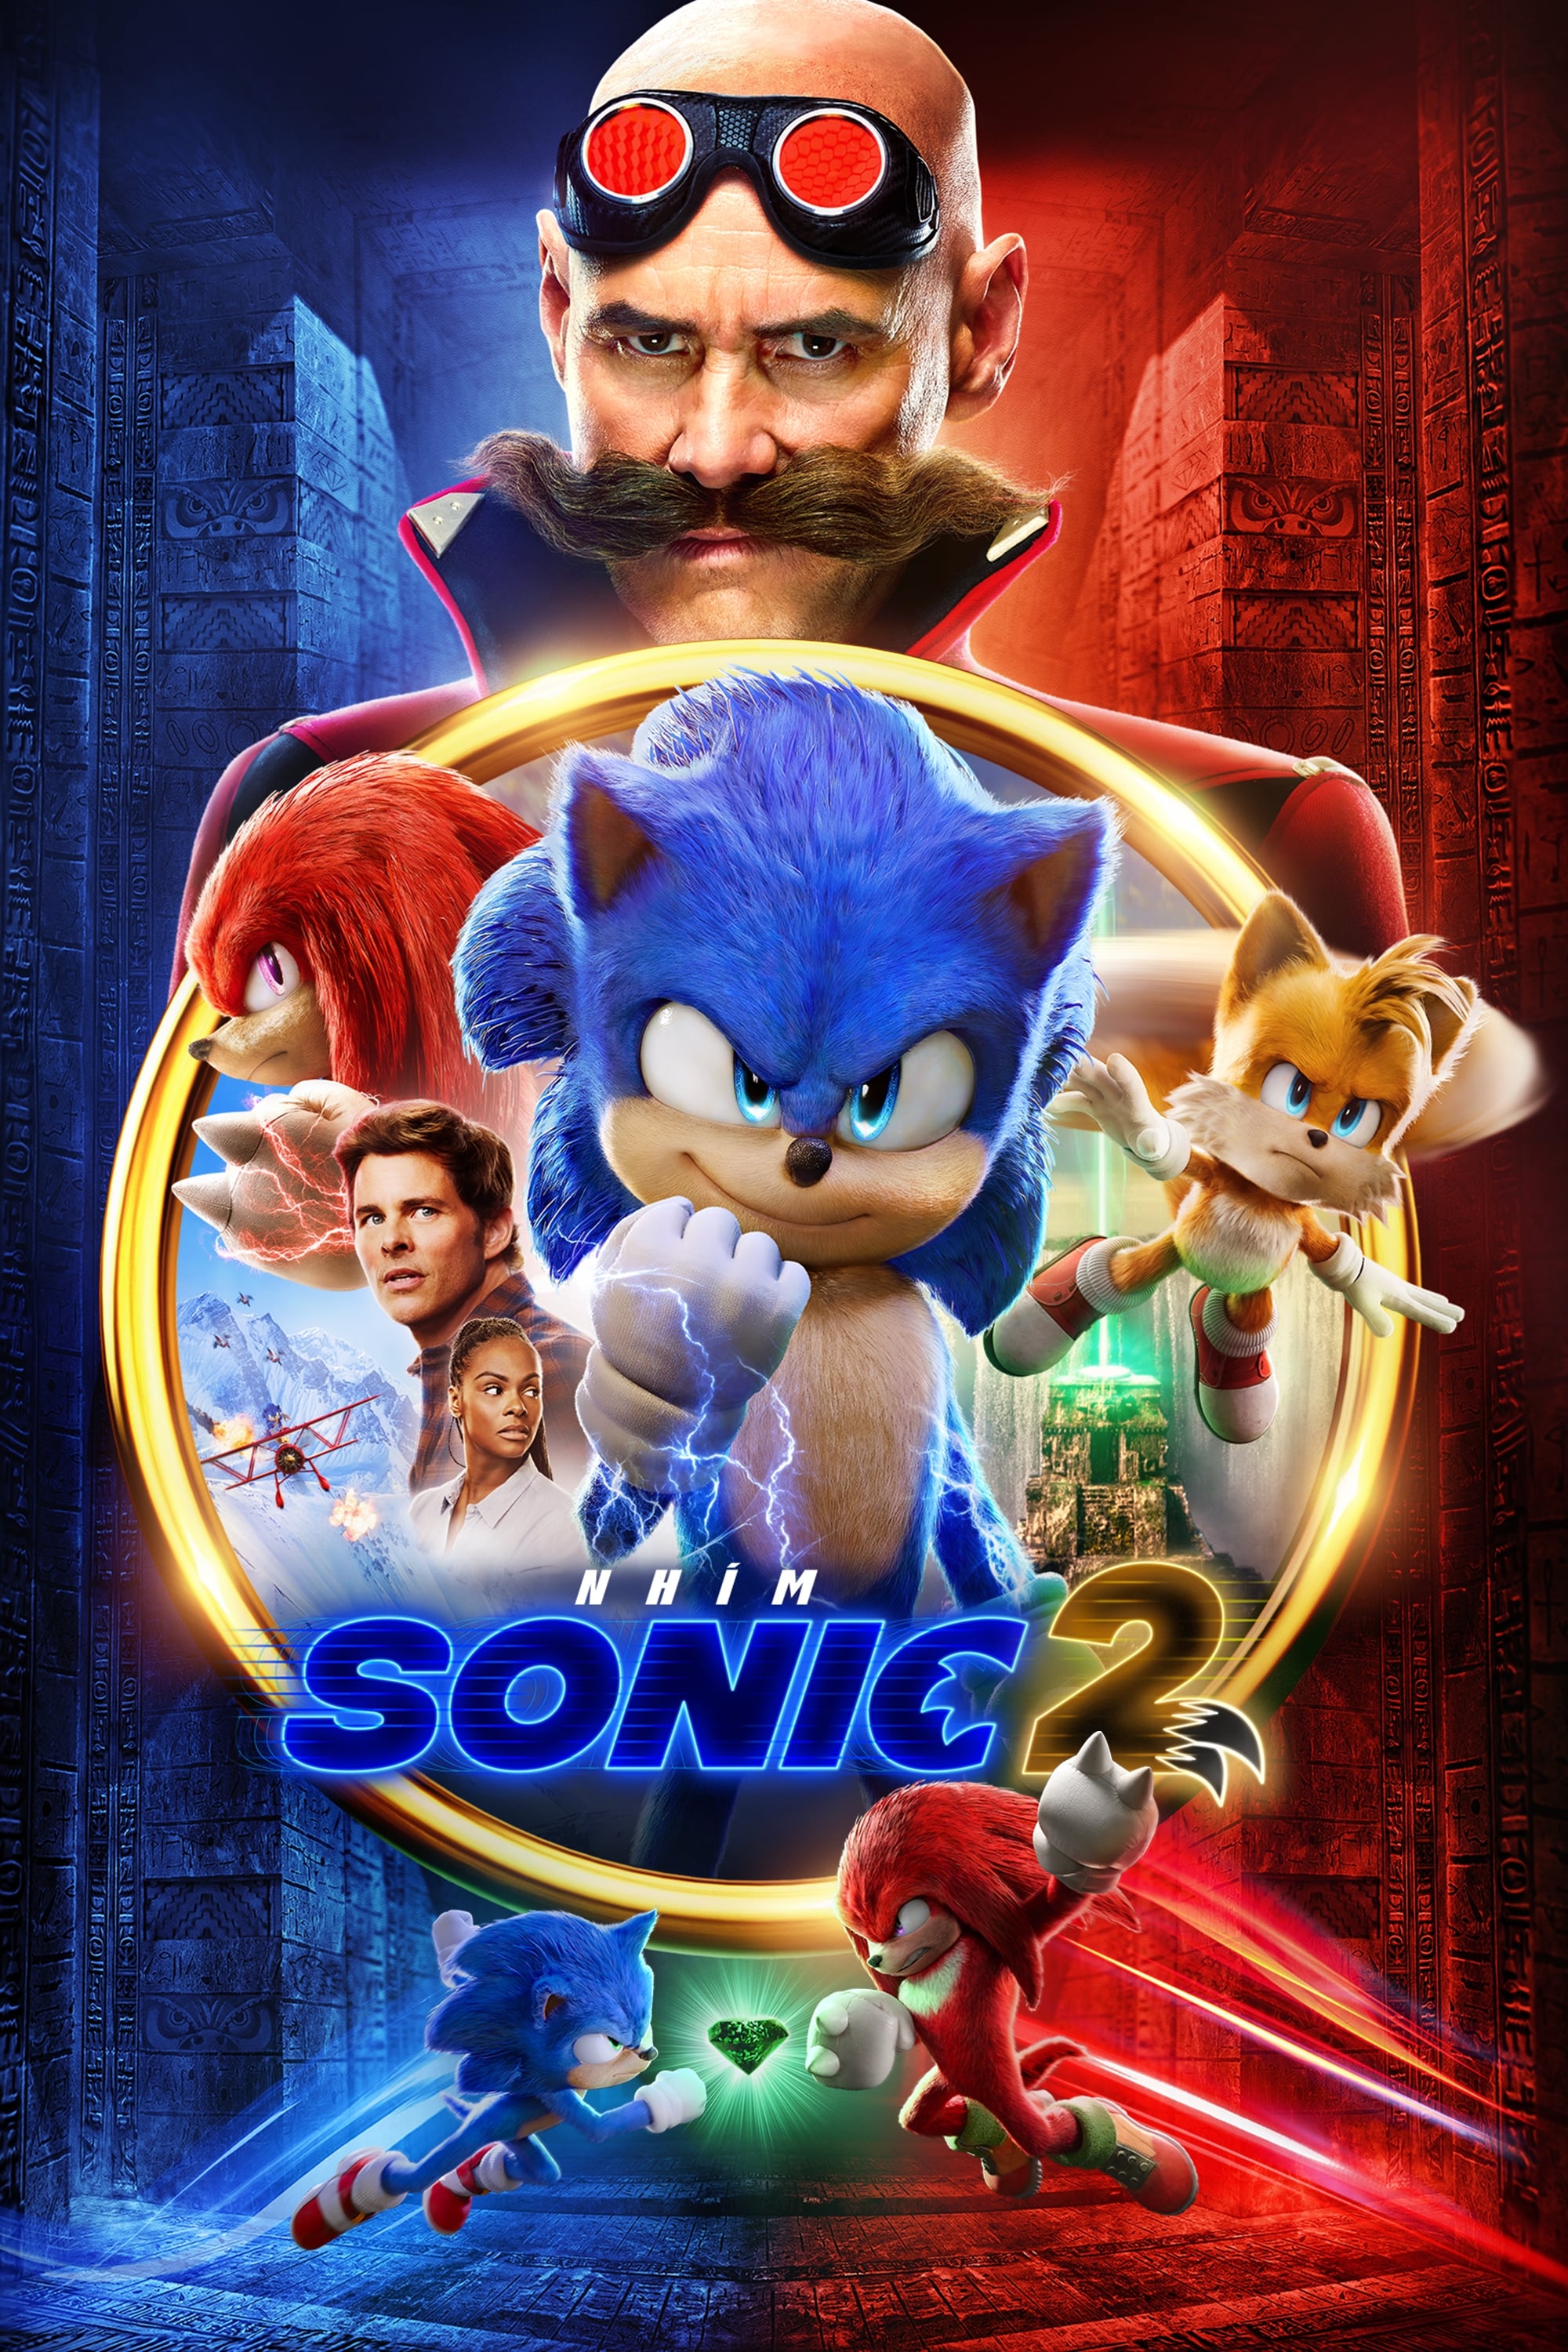 Nhím Sonic 2 (Sonic the Hedgehog 2) [2022]